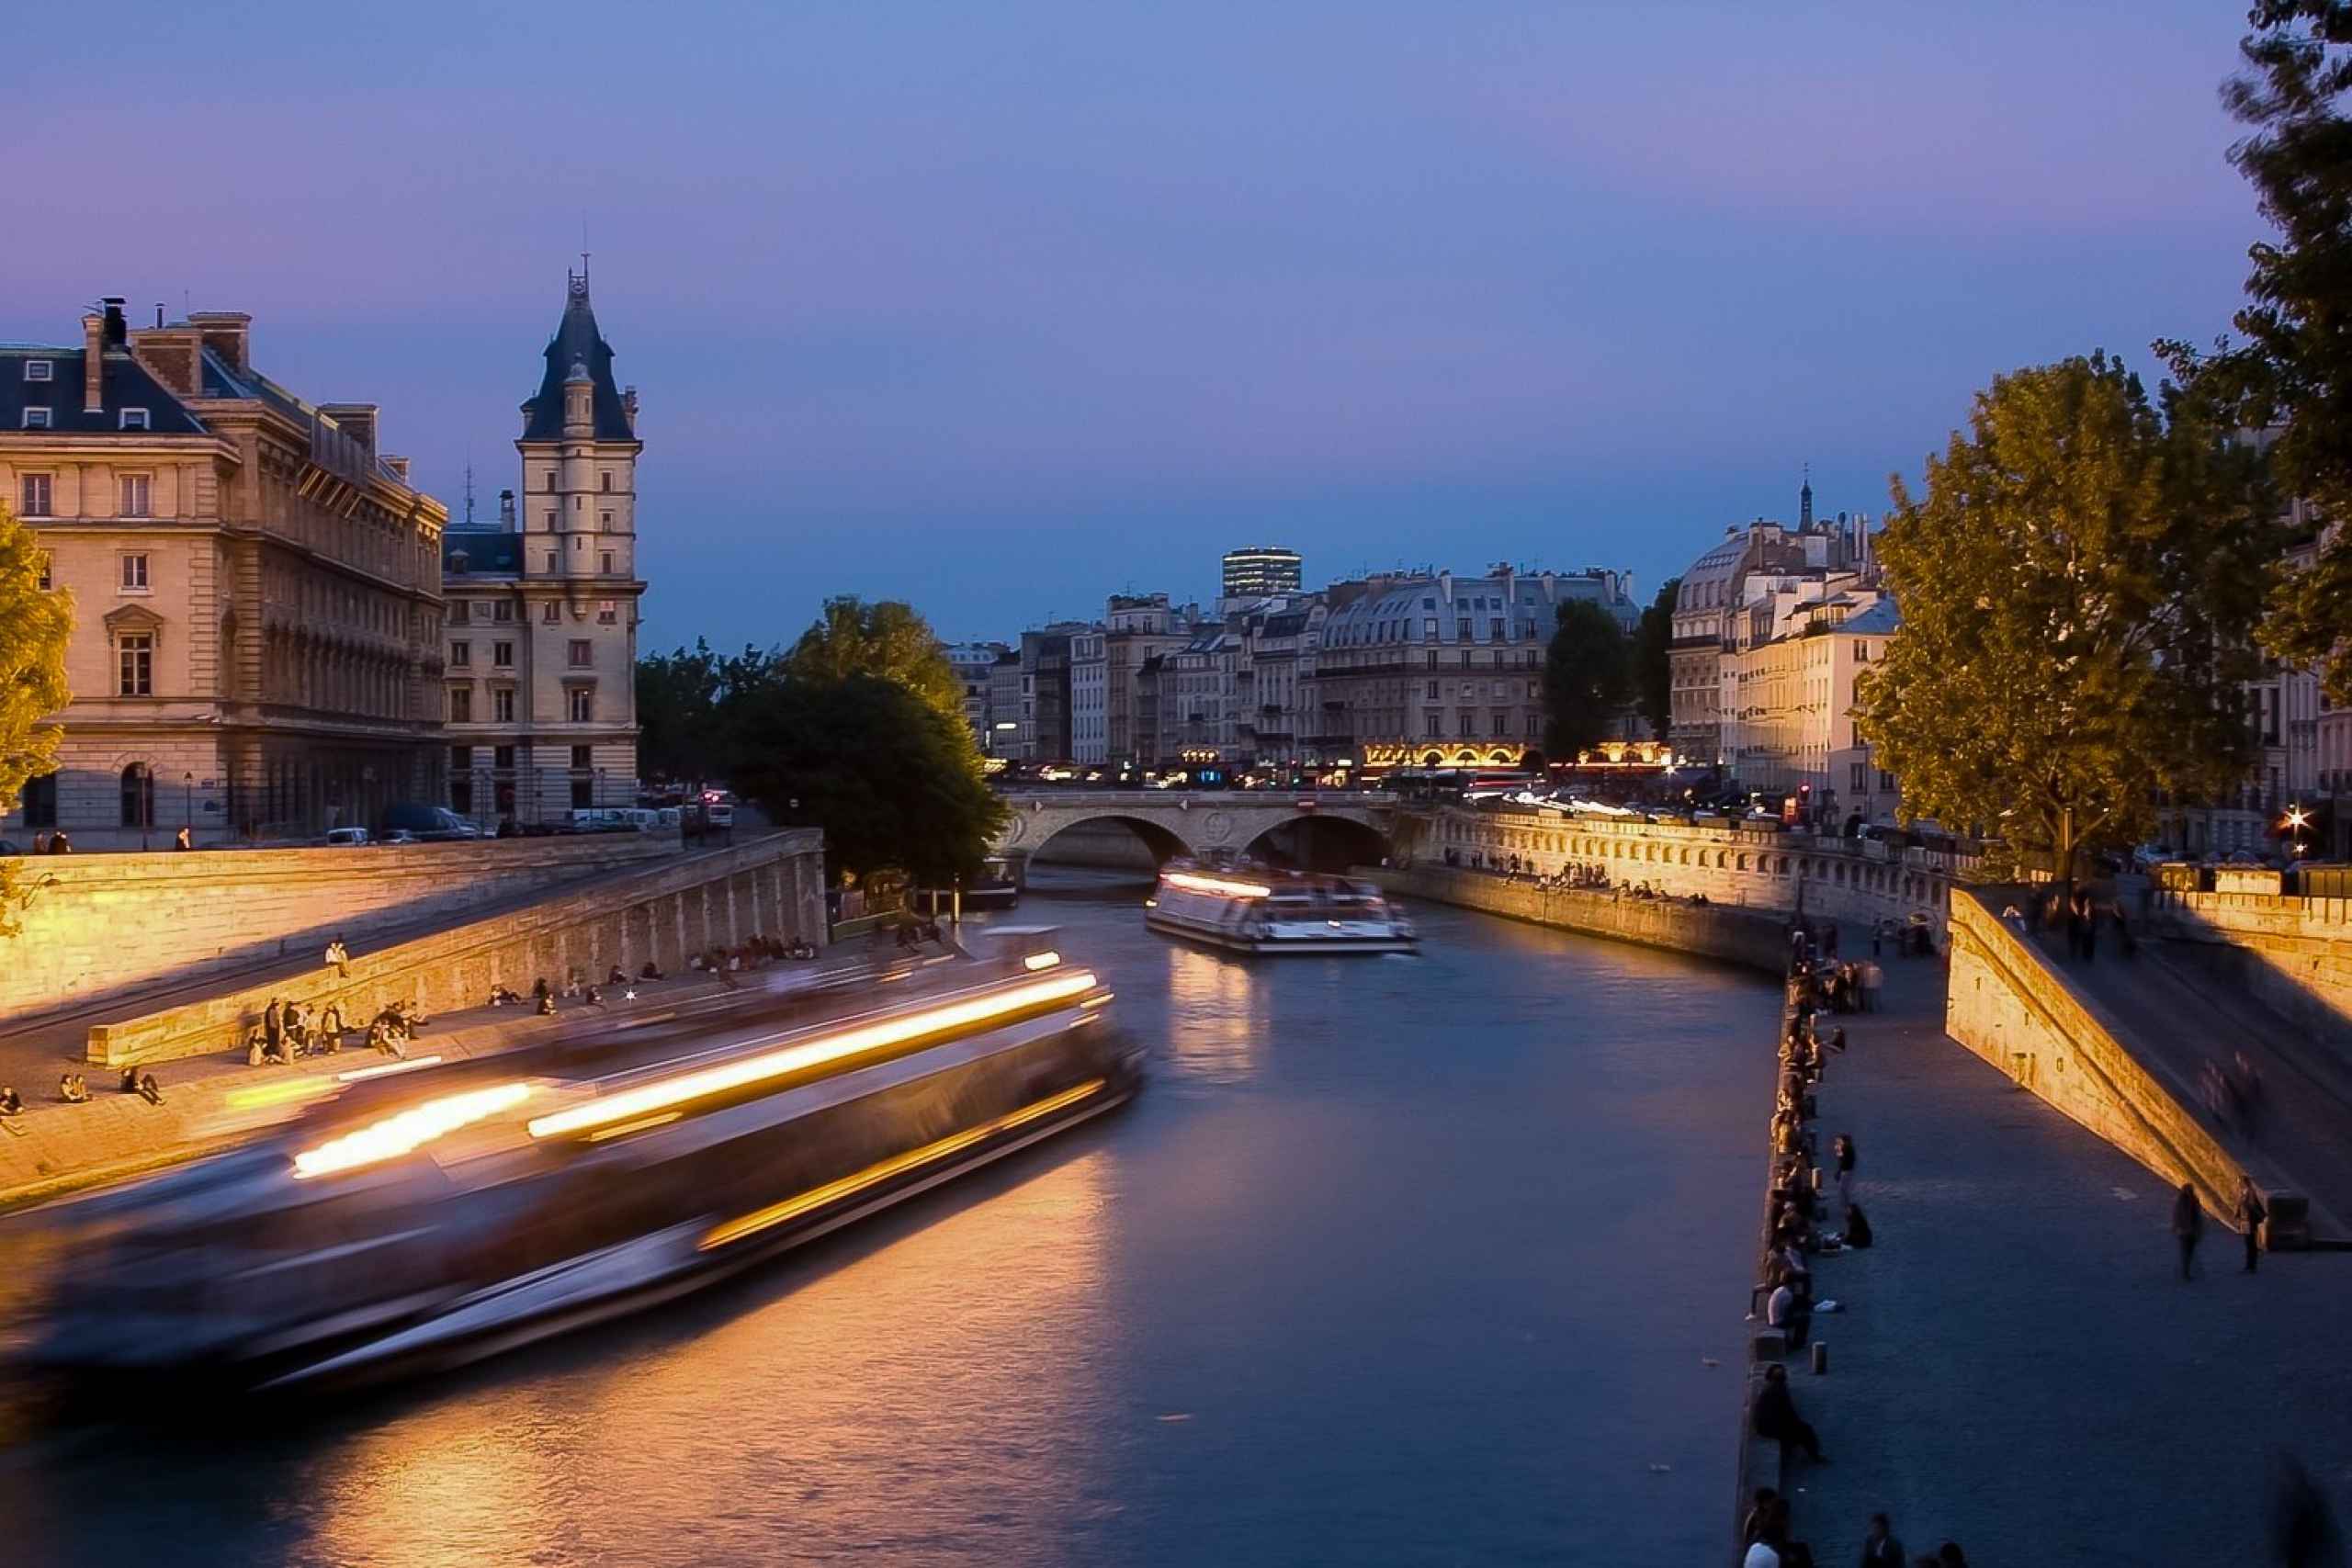 Сена на французском. Река сена во Франции. Река сена в Париже. Набережные Сены во Франции. La seine (река сена) Франция.